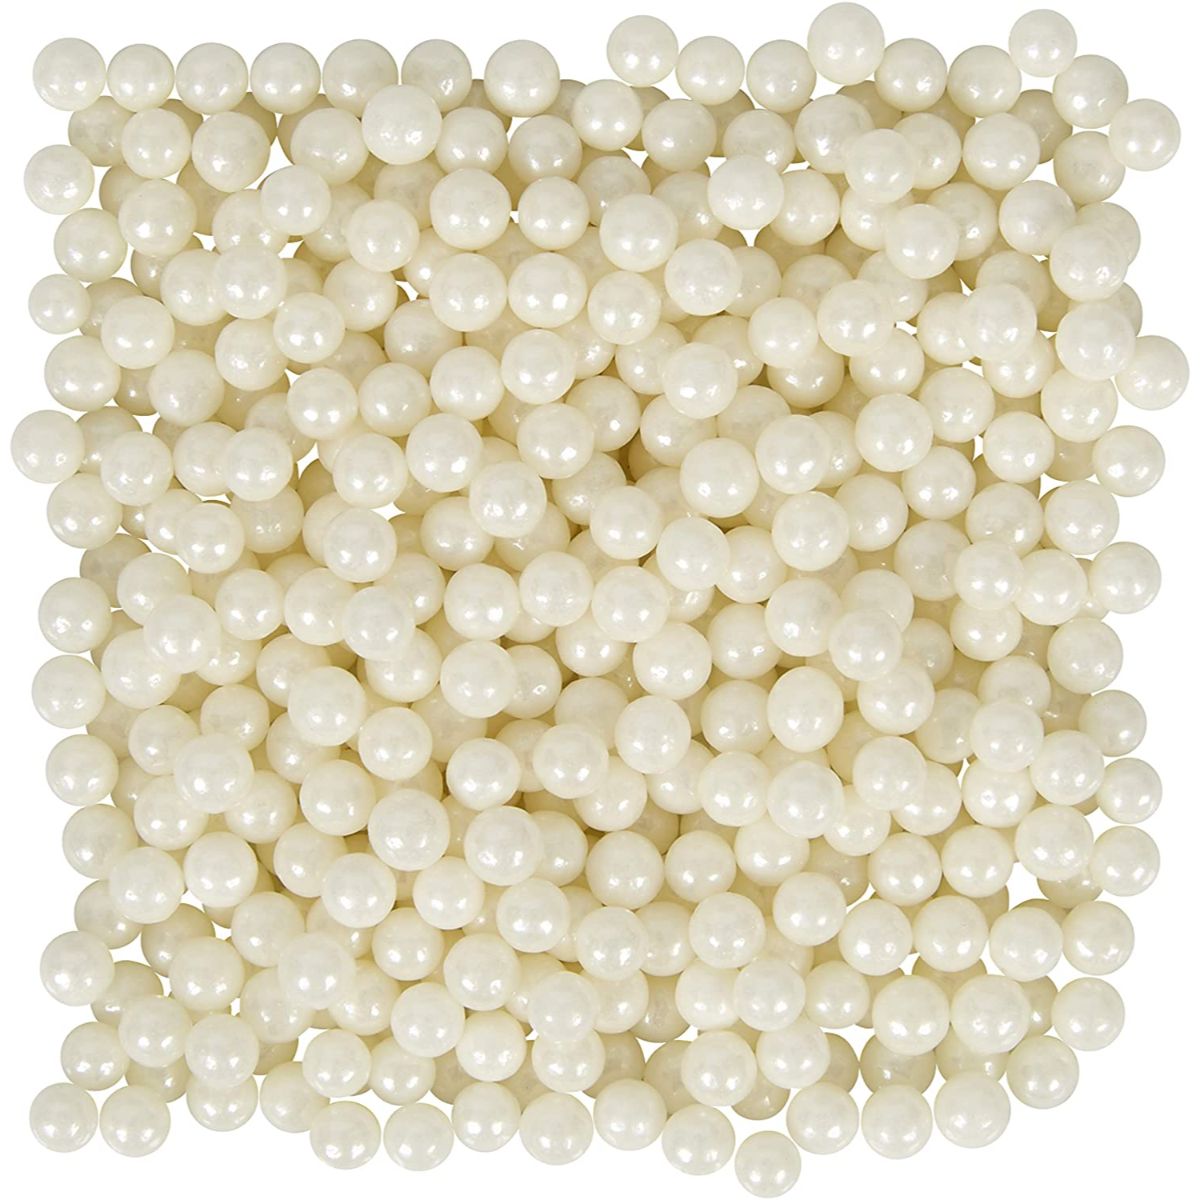 Wilton Sugar Pearls White 5oz